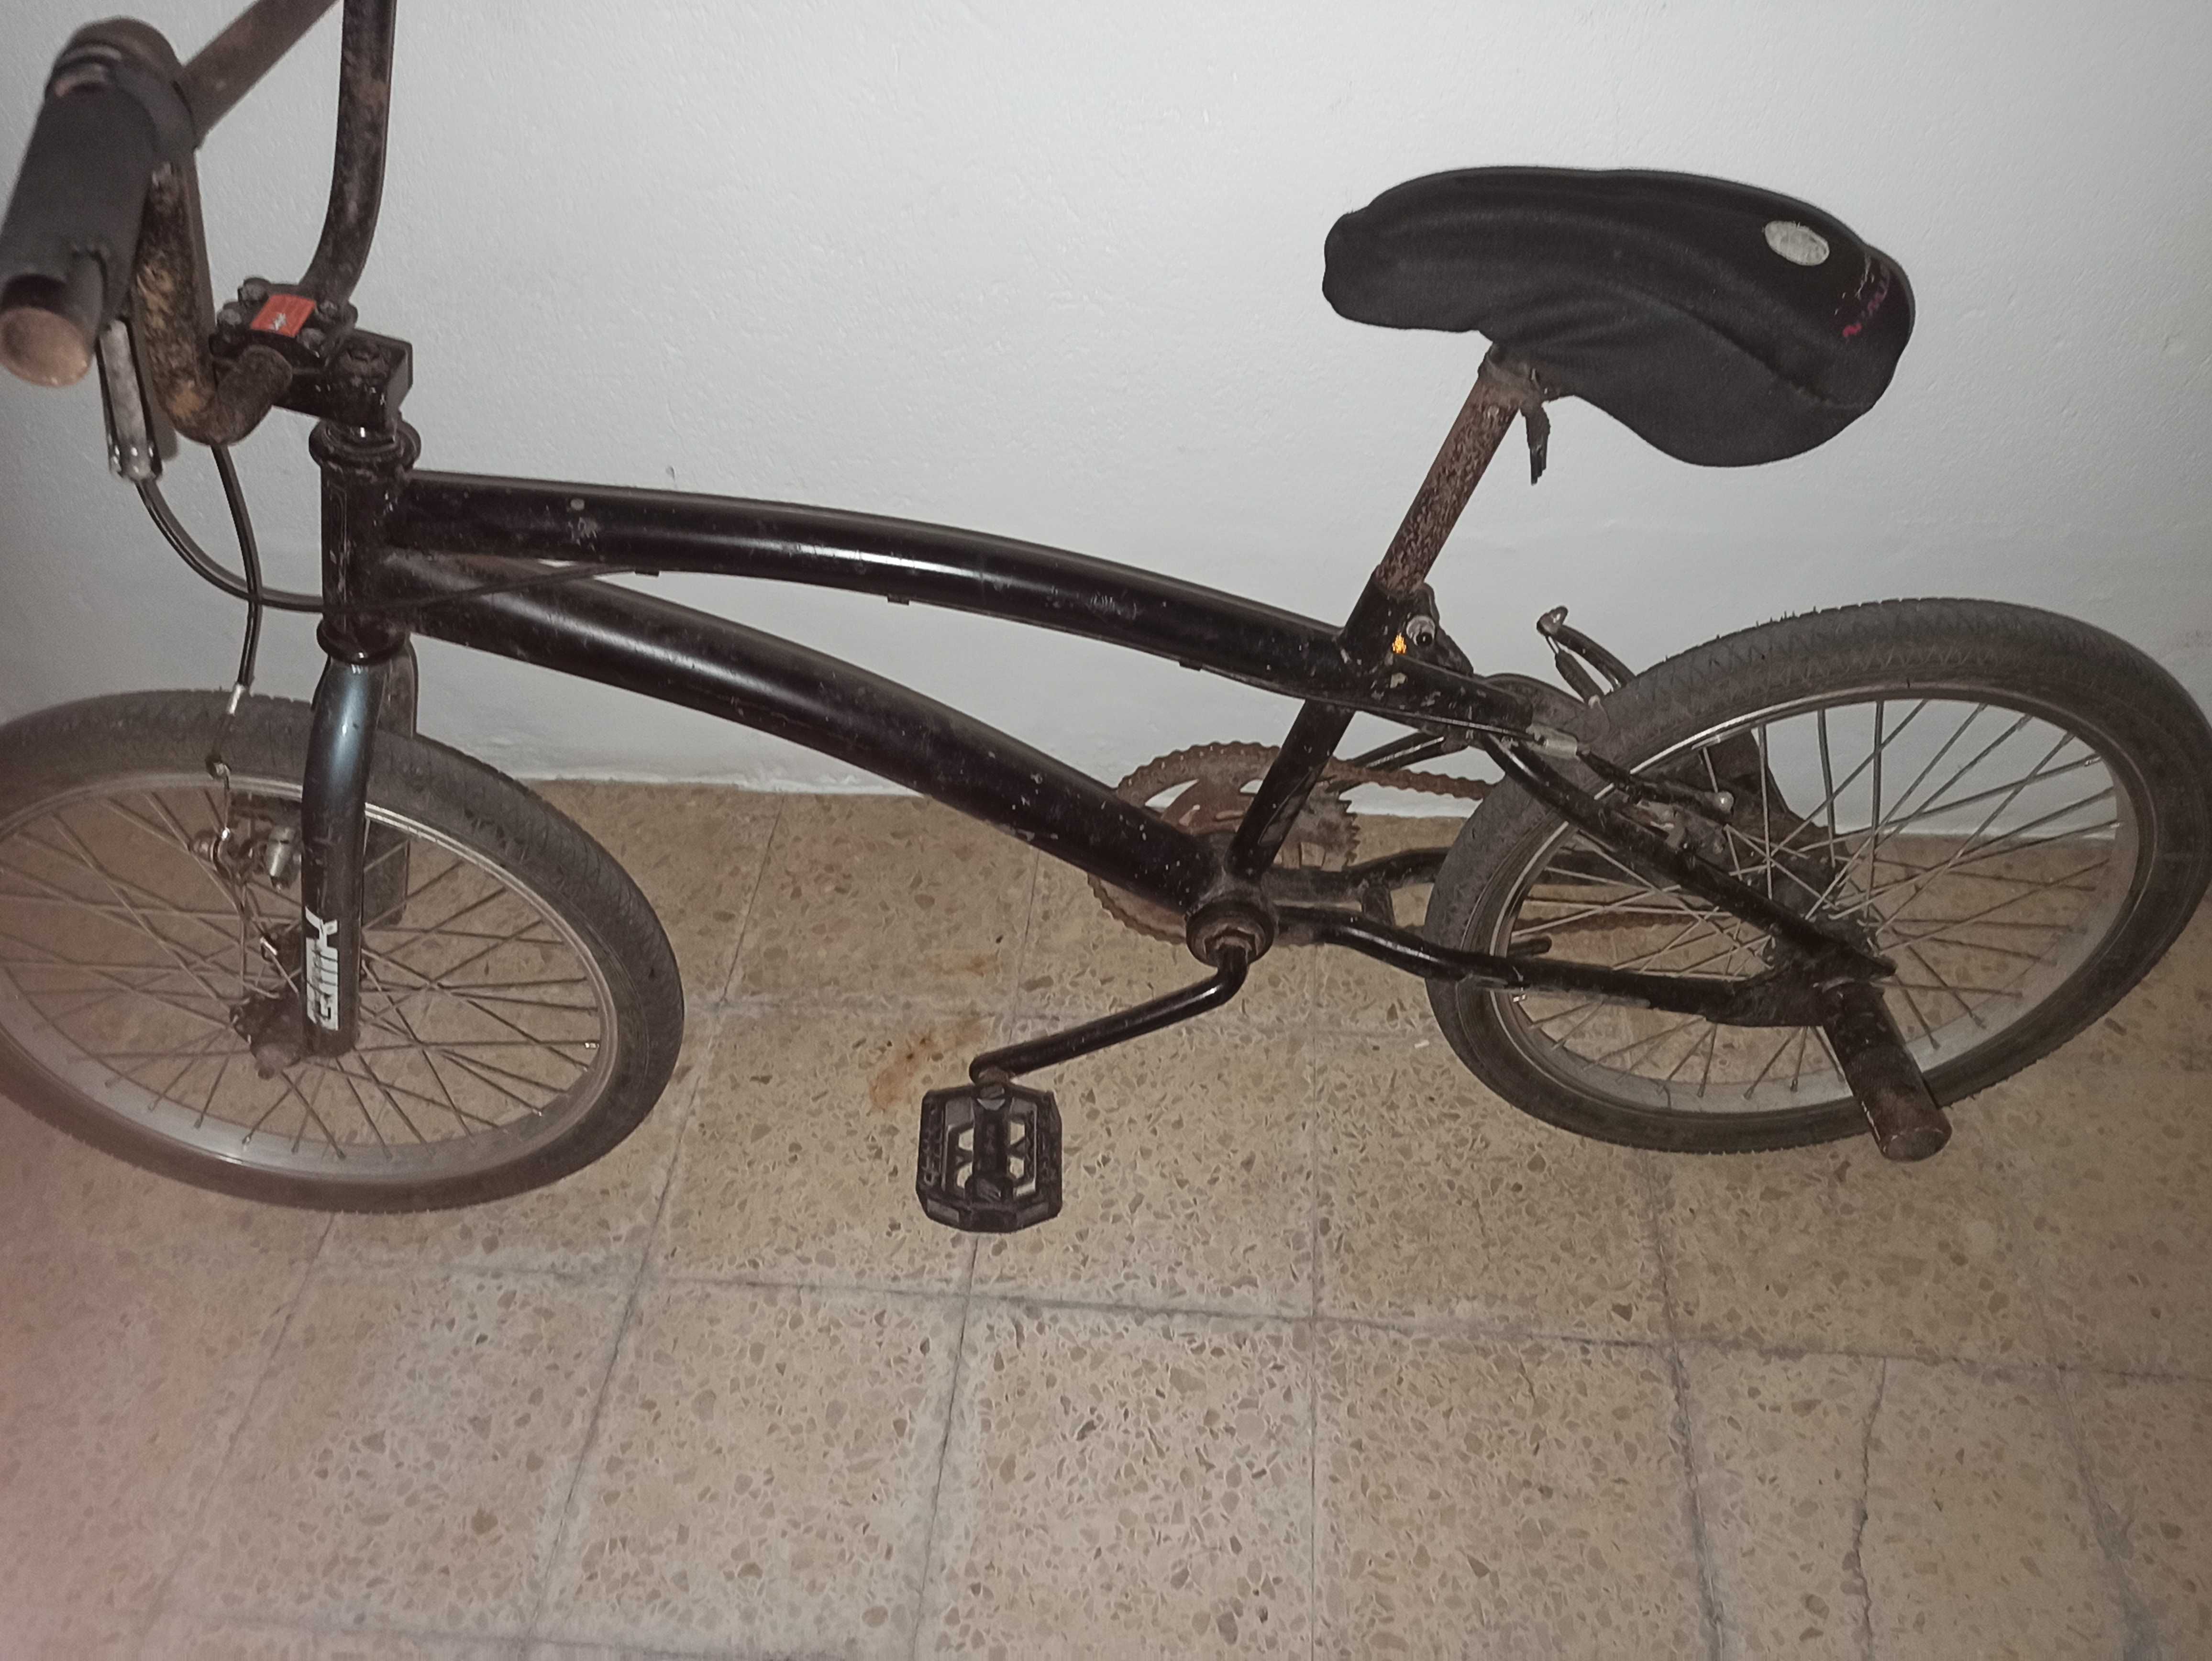 Bicicleta #BMX# estilo vice city (usada/boa)